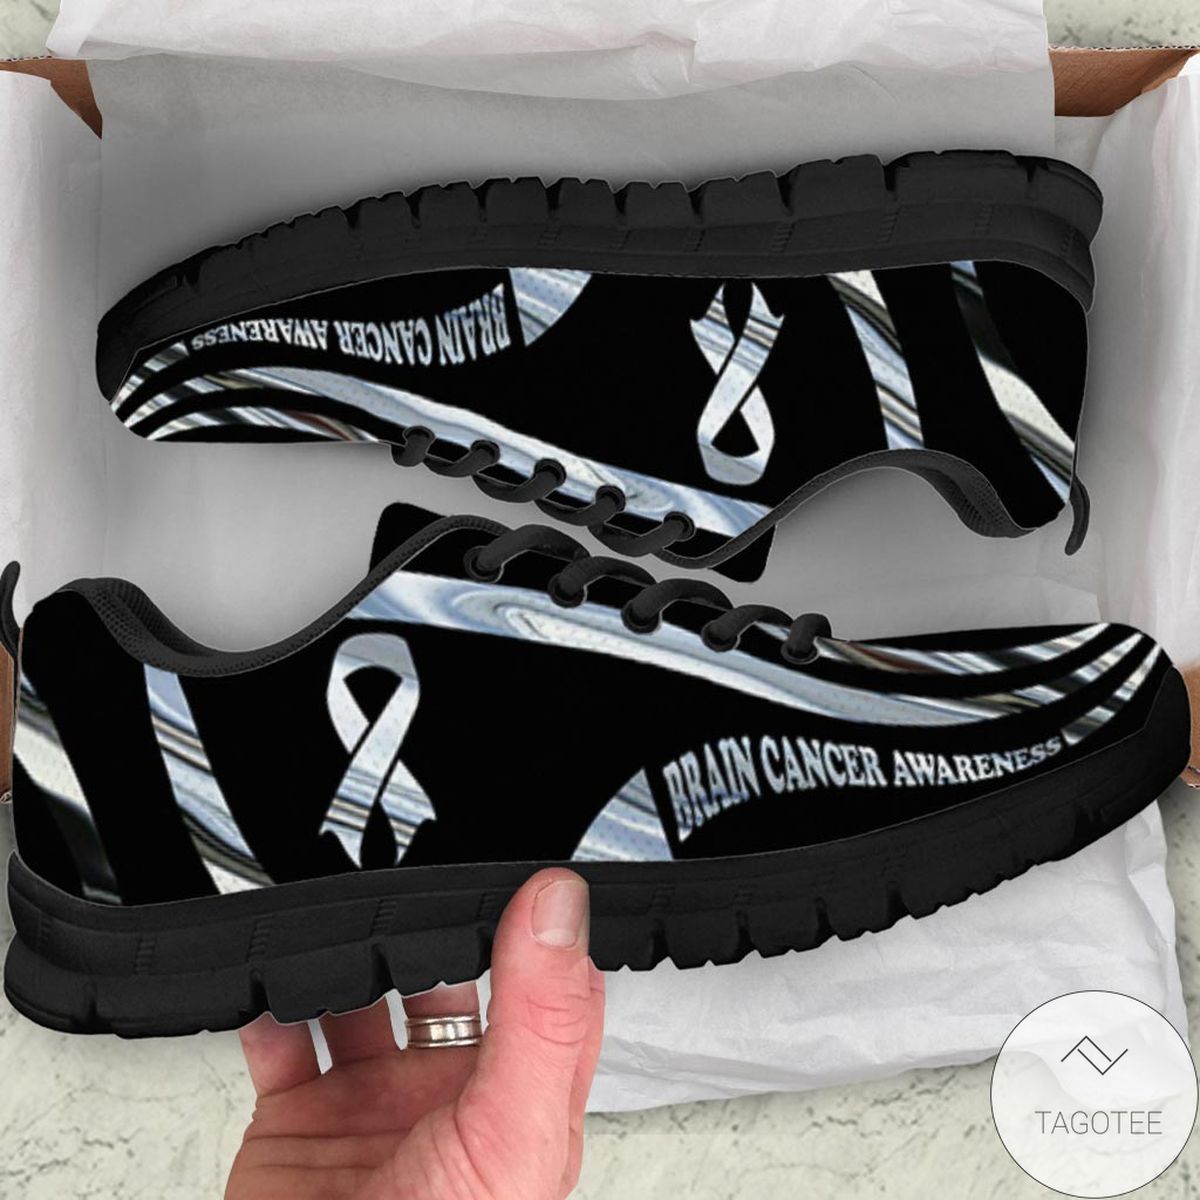 Brain Cancer Awareness Sneakers